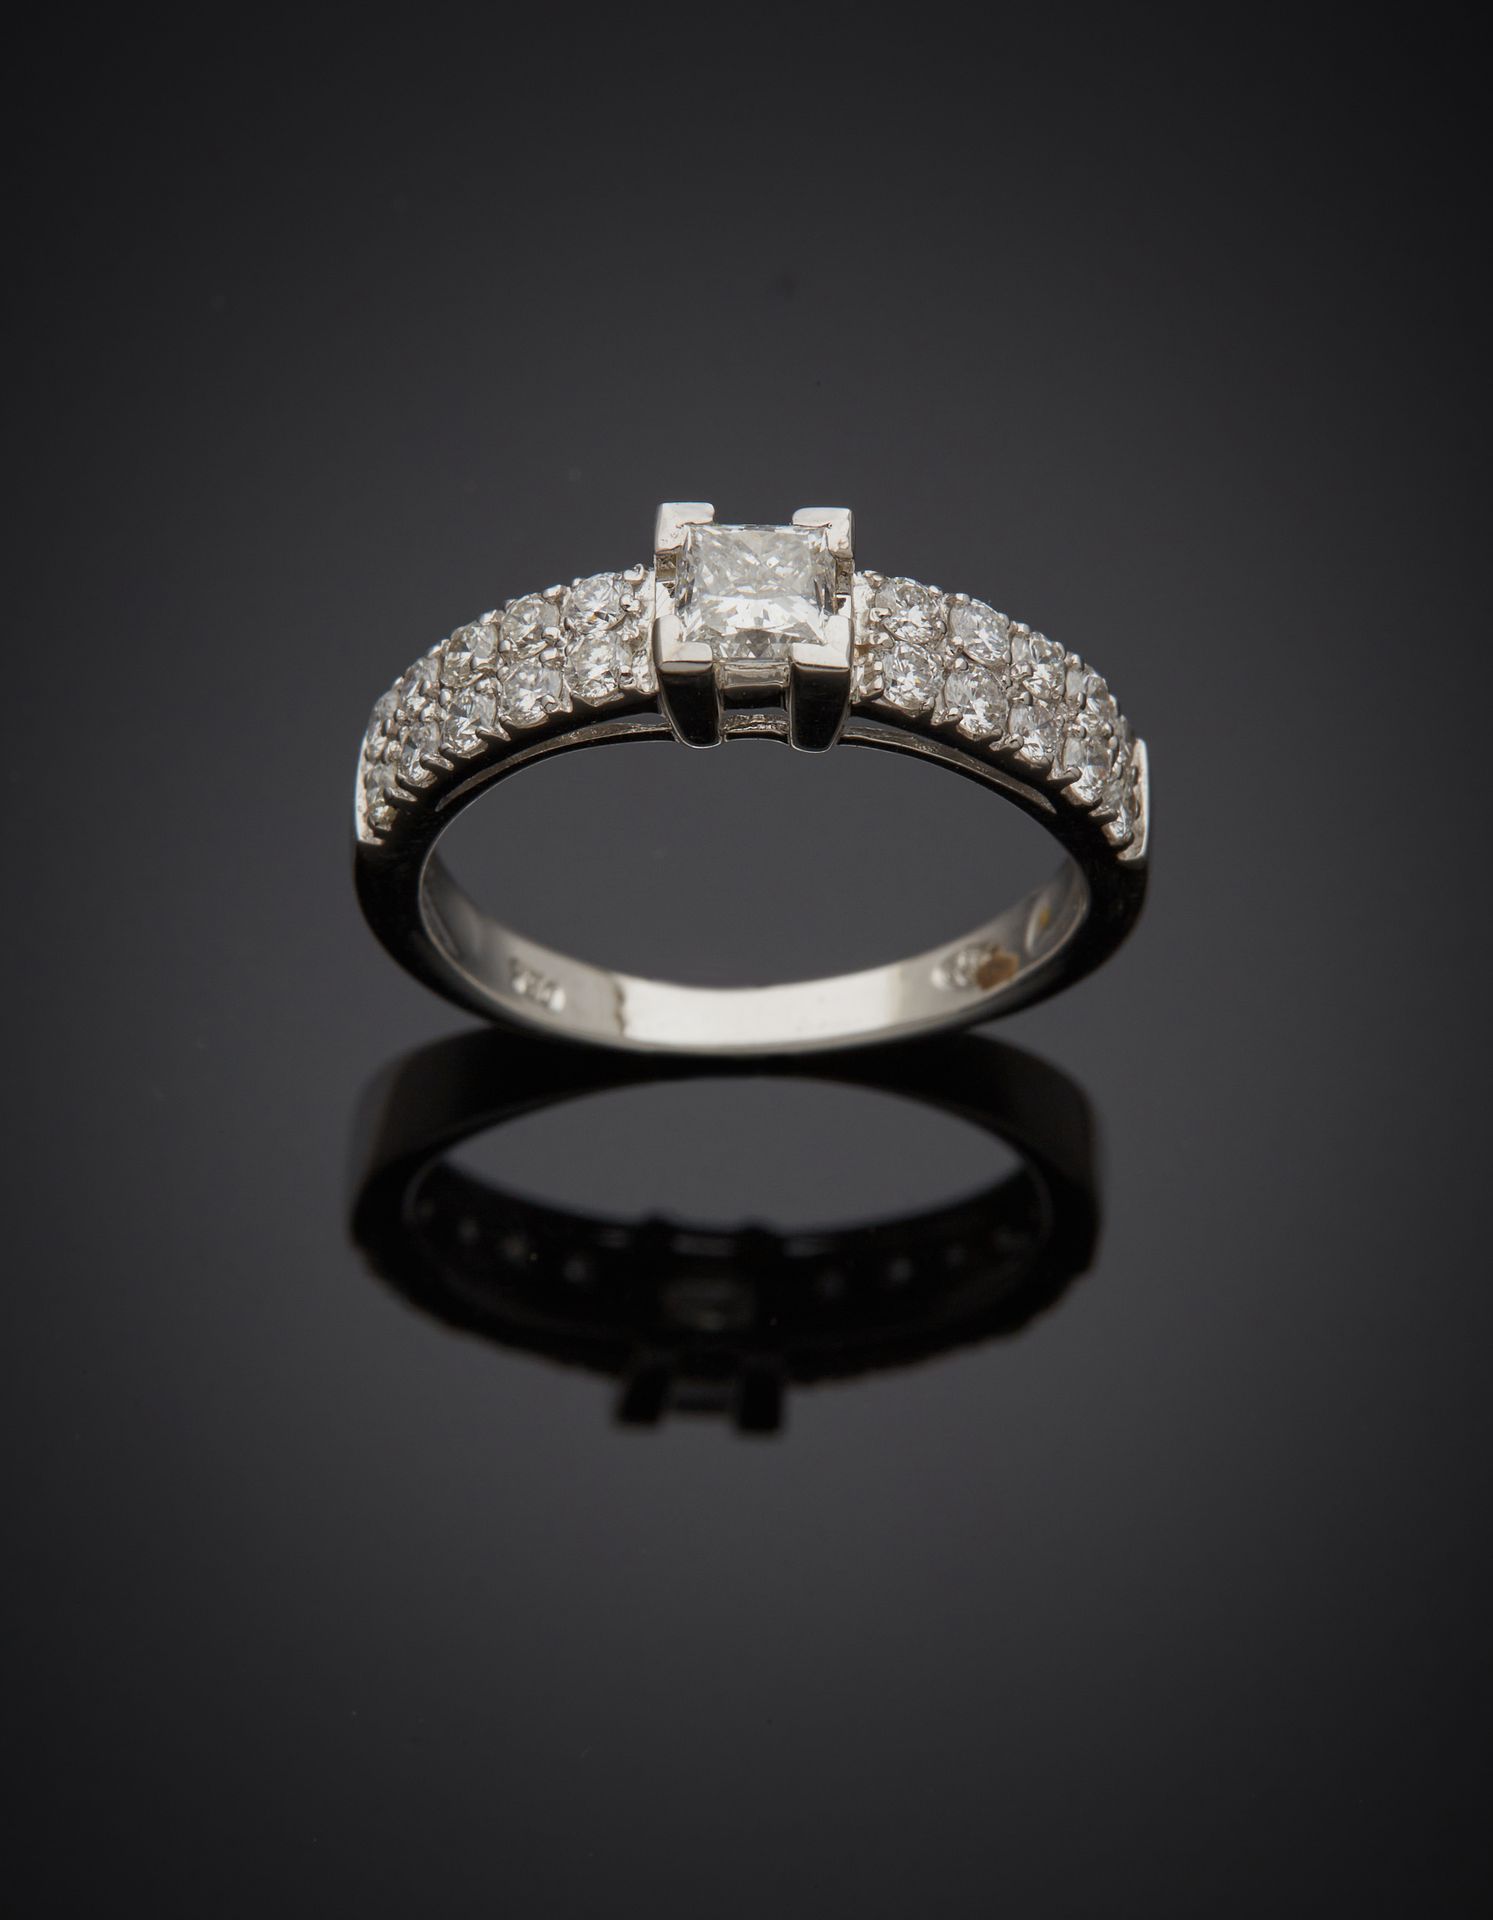 Null 一枚白金戒指（750‰），镶嵌着一颗公主式切割的钻石，重约0.5克拉，并镶嵌着排列整齐的明亮式切割钻石。
指头：54 - 毛重：3.5 g